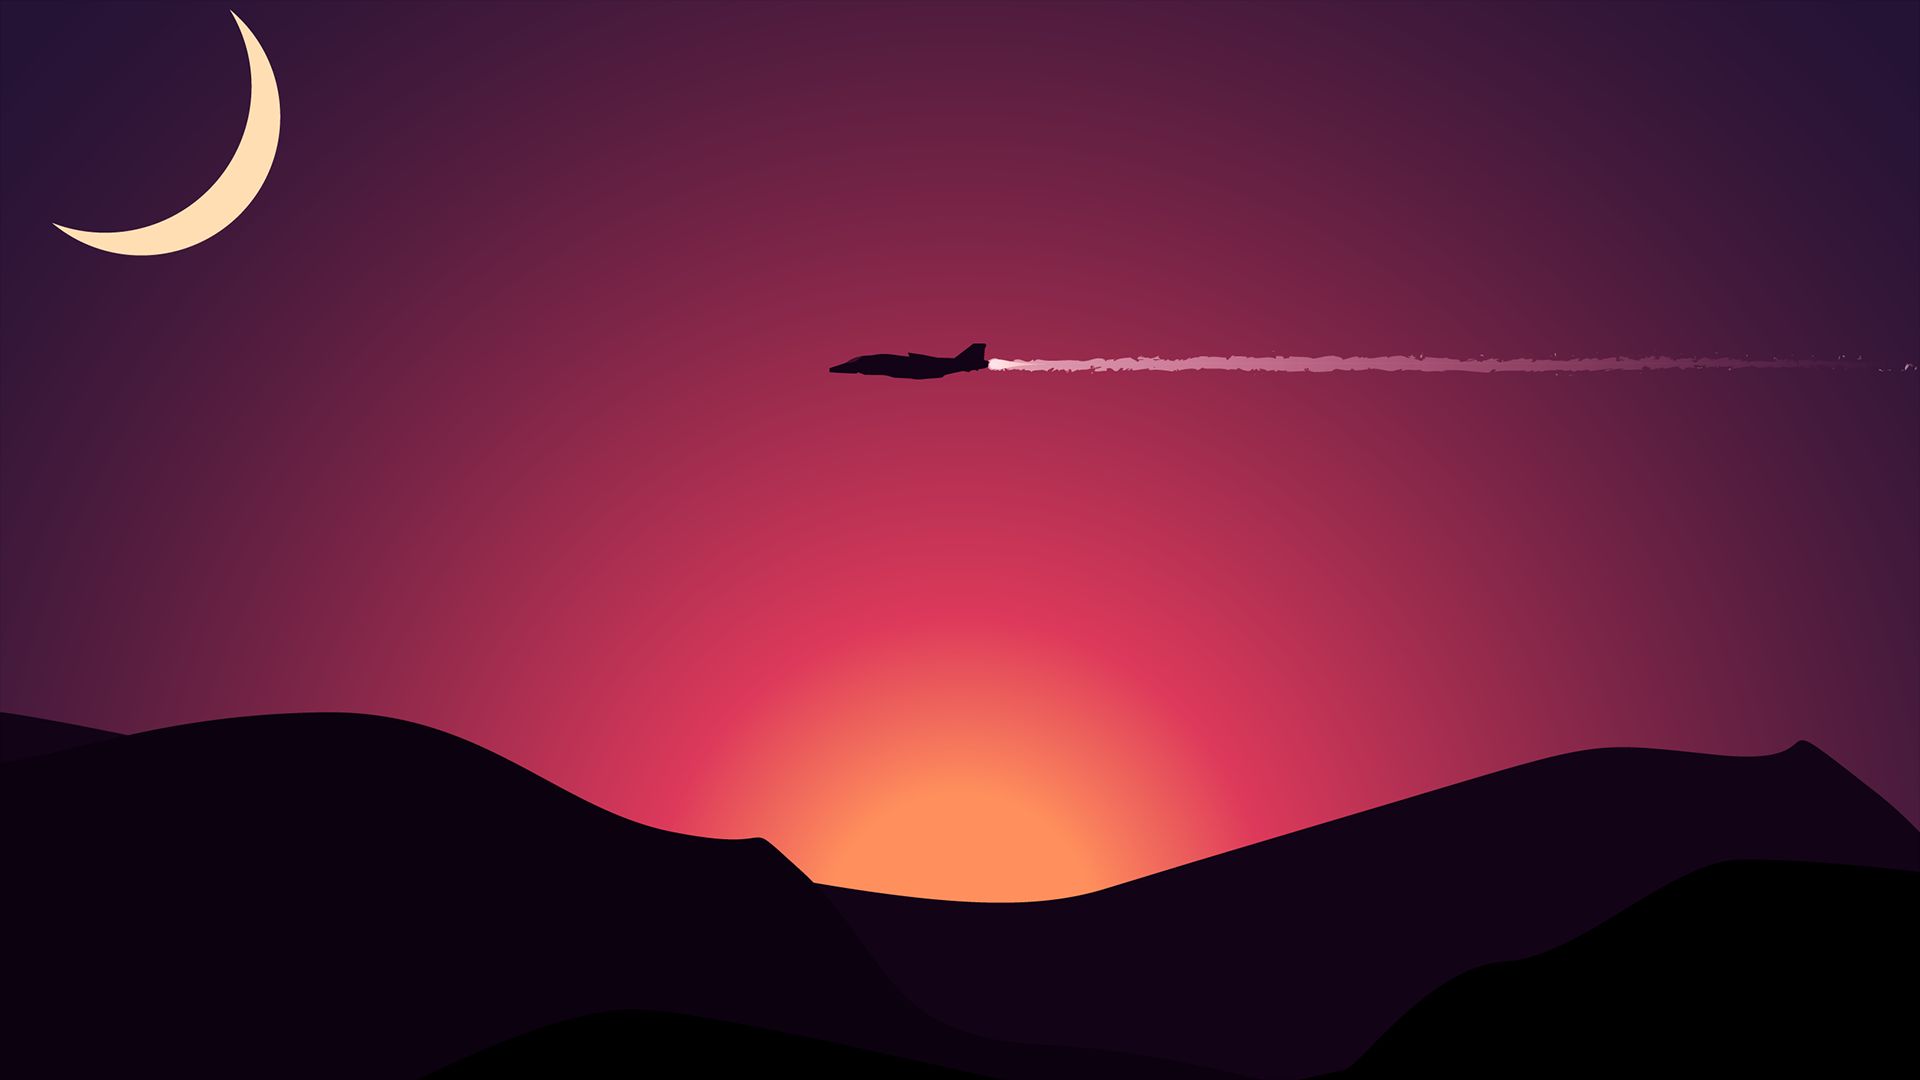 military, artistic, airplane, crescent, minimalist, sunset images